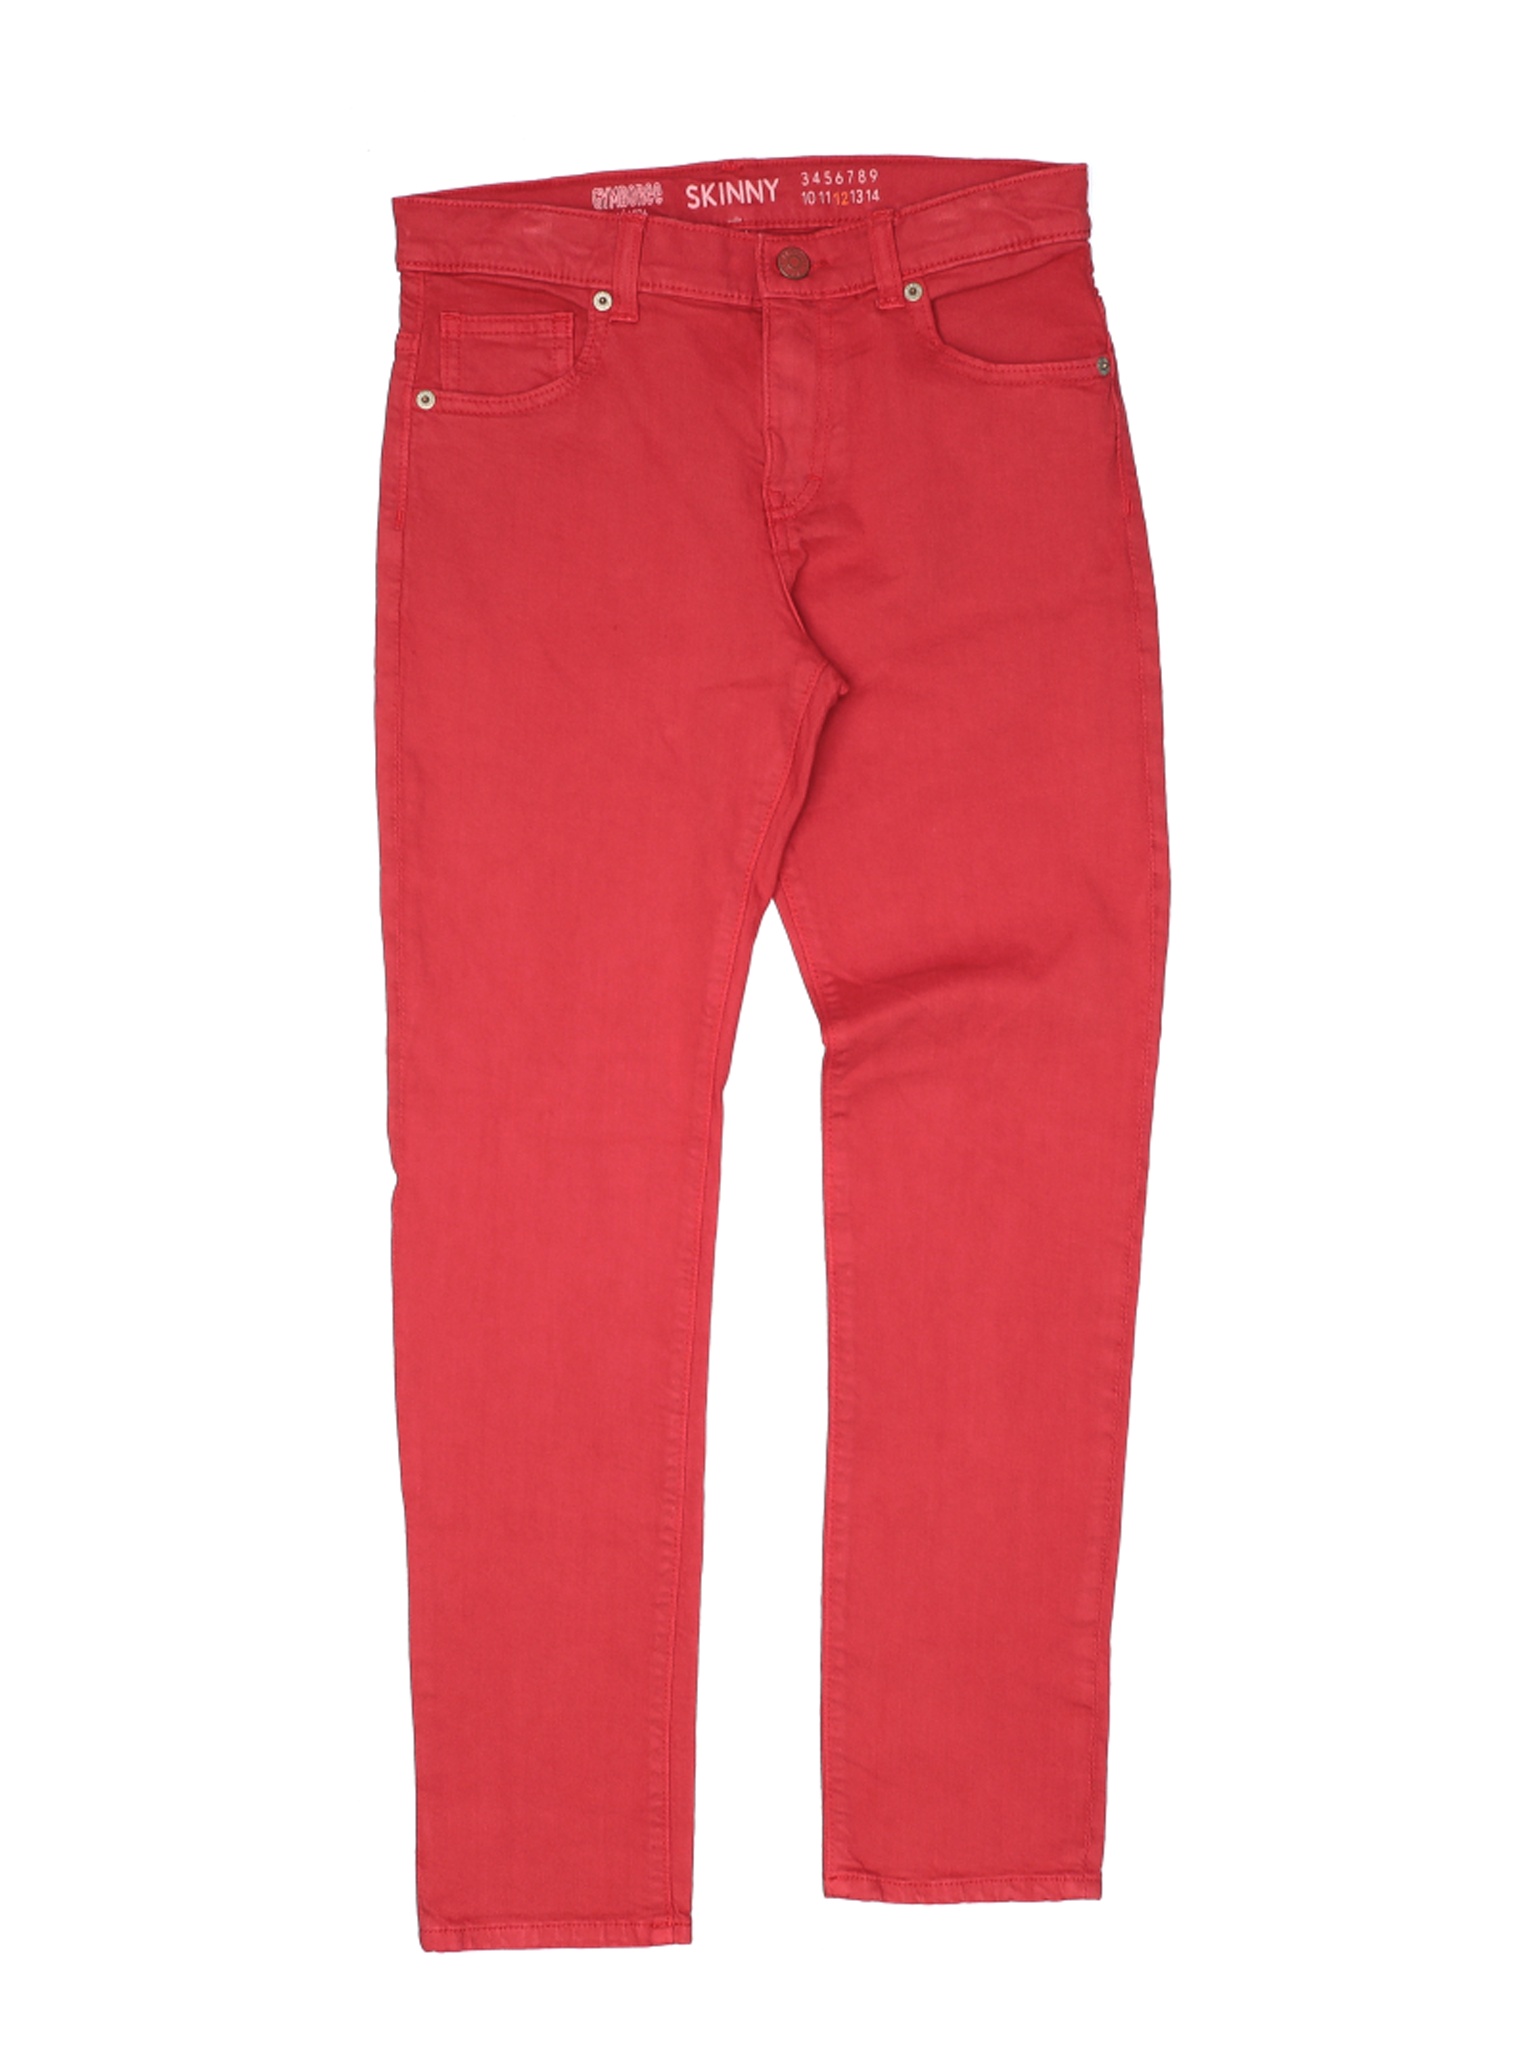 NWT Gymboree Girls Red Jeans 12 | eBay